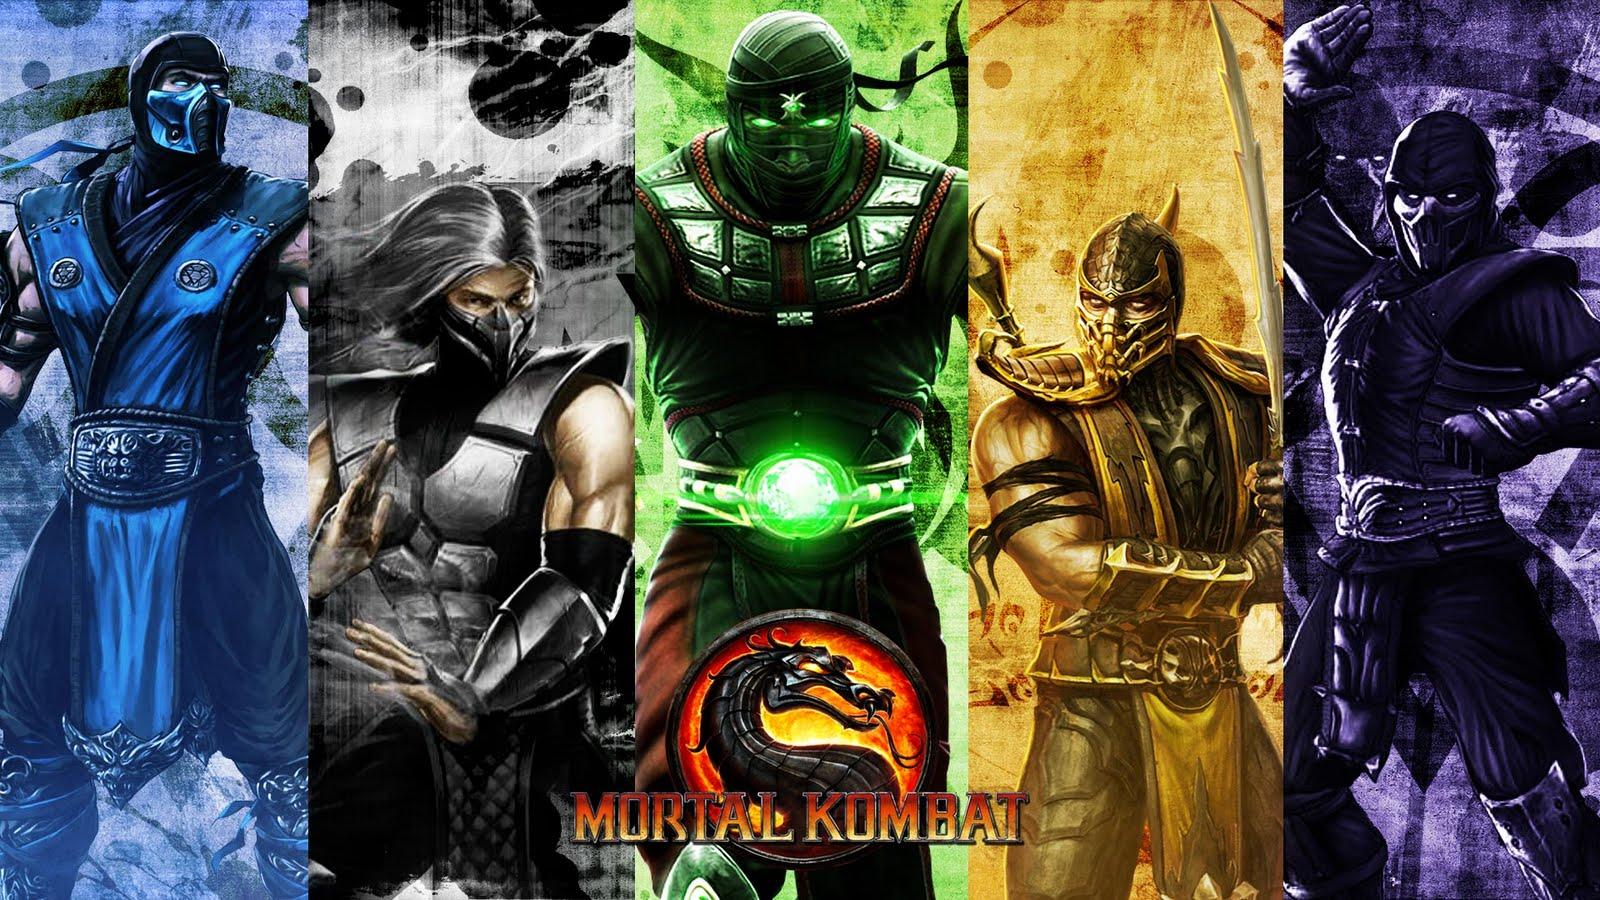 Mortal kombat 9 wallpaper